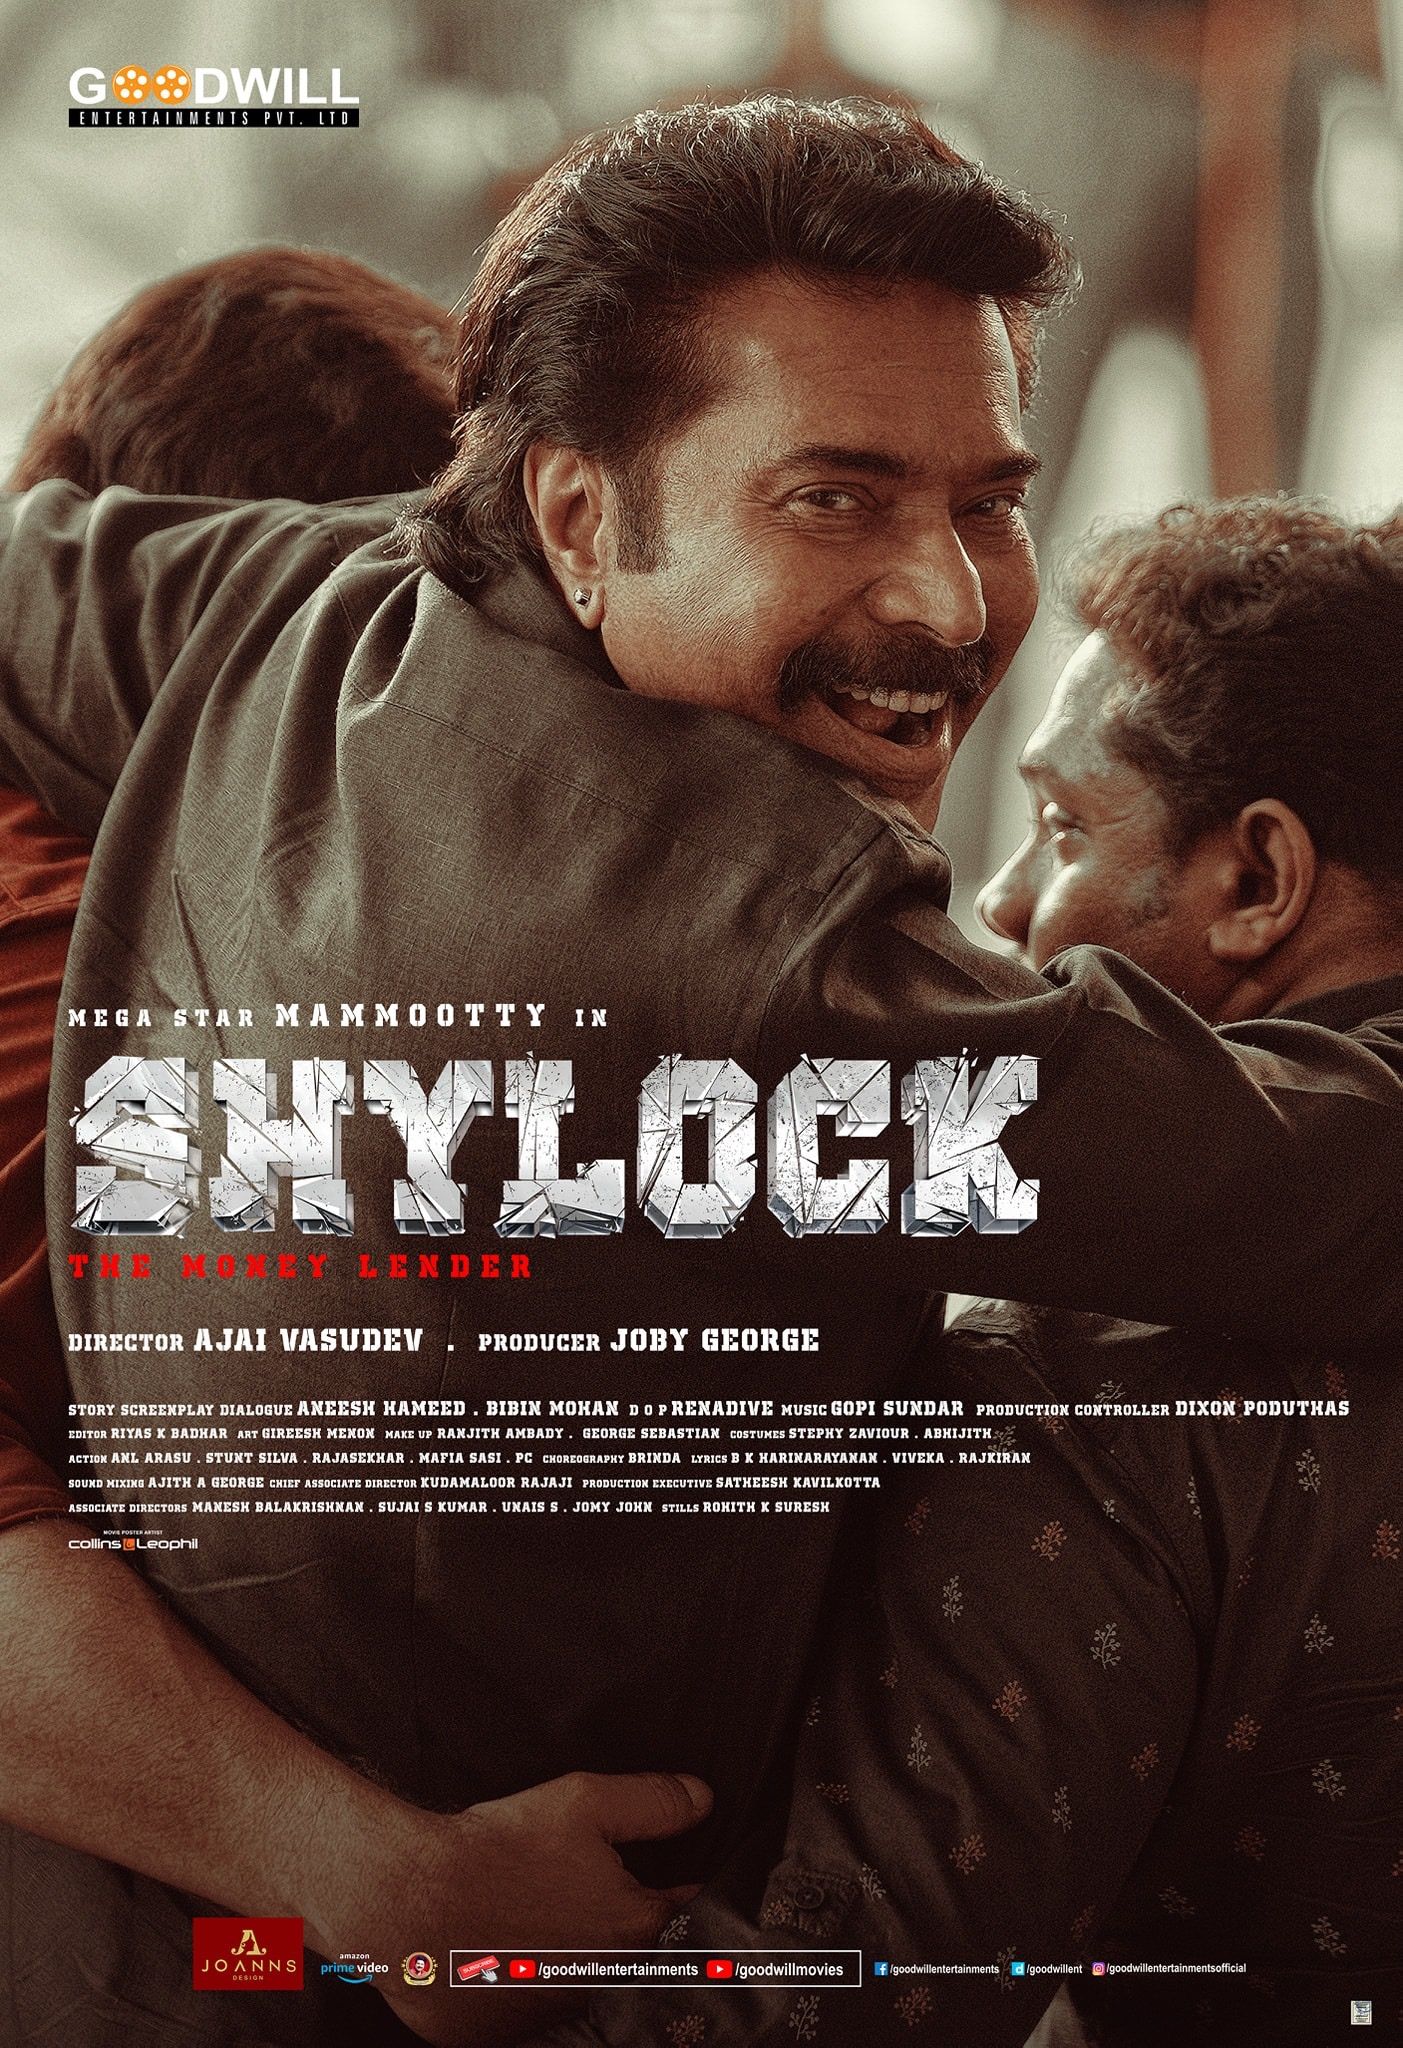 Shylock (2020) Hindi Dubbed Full Movie